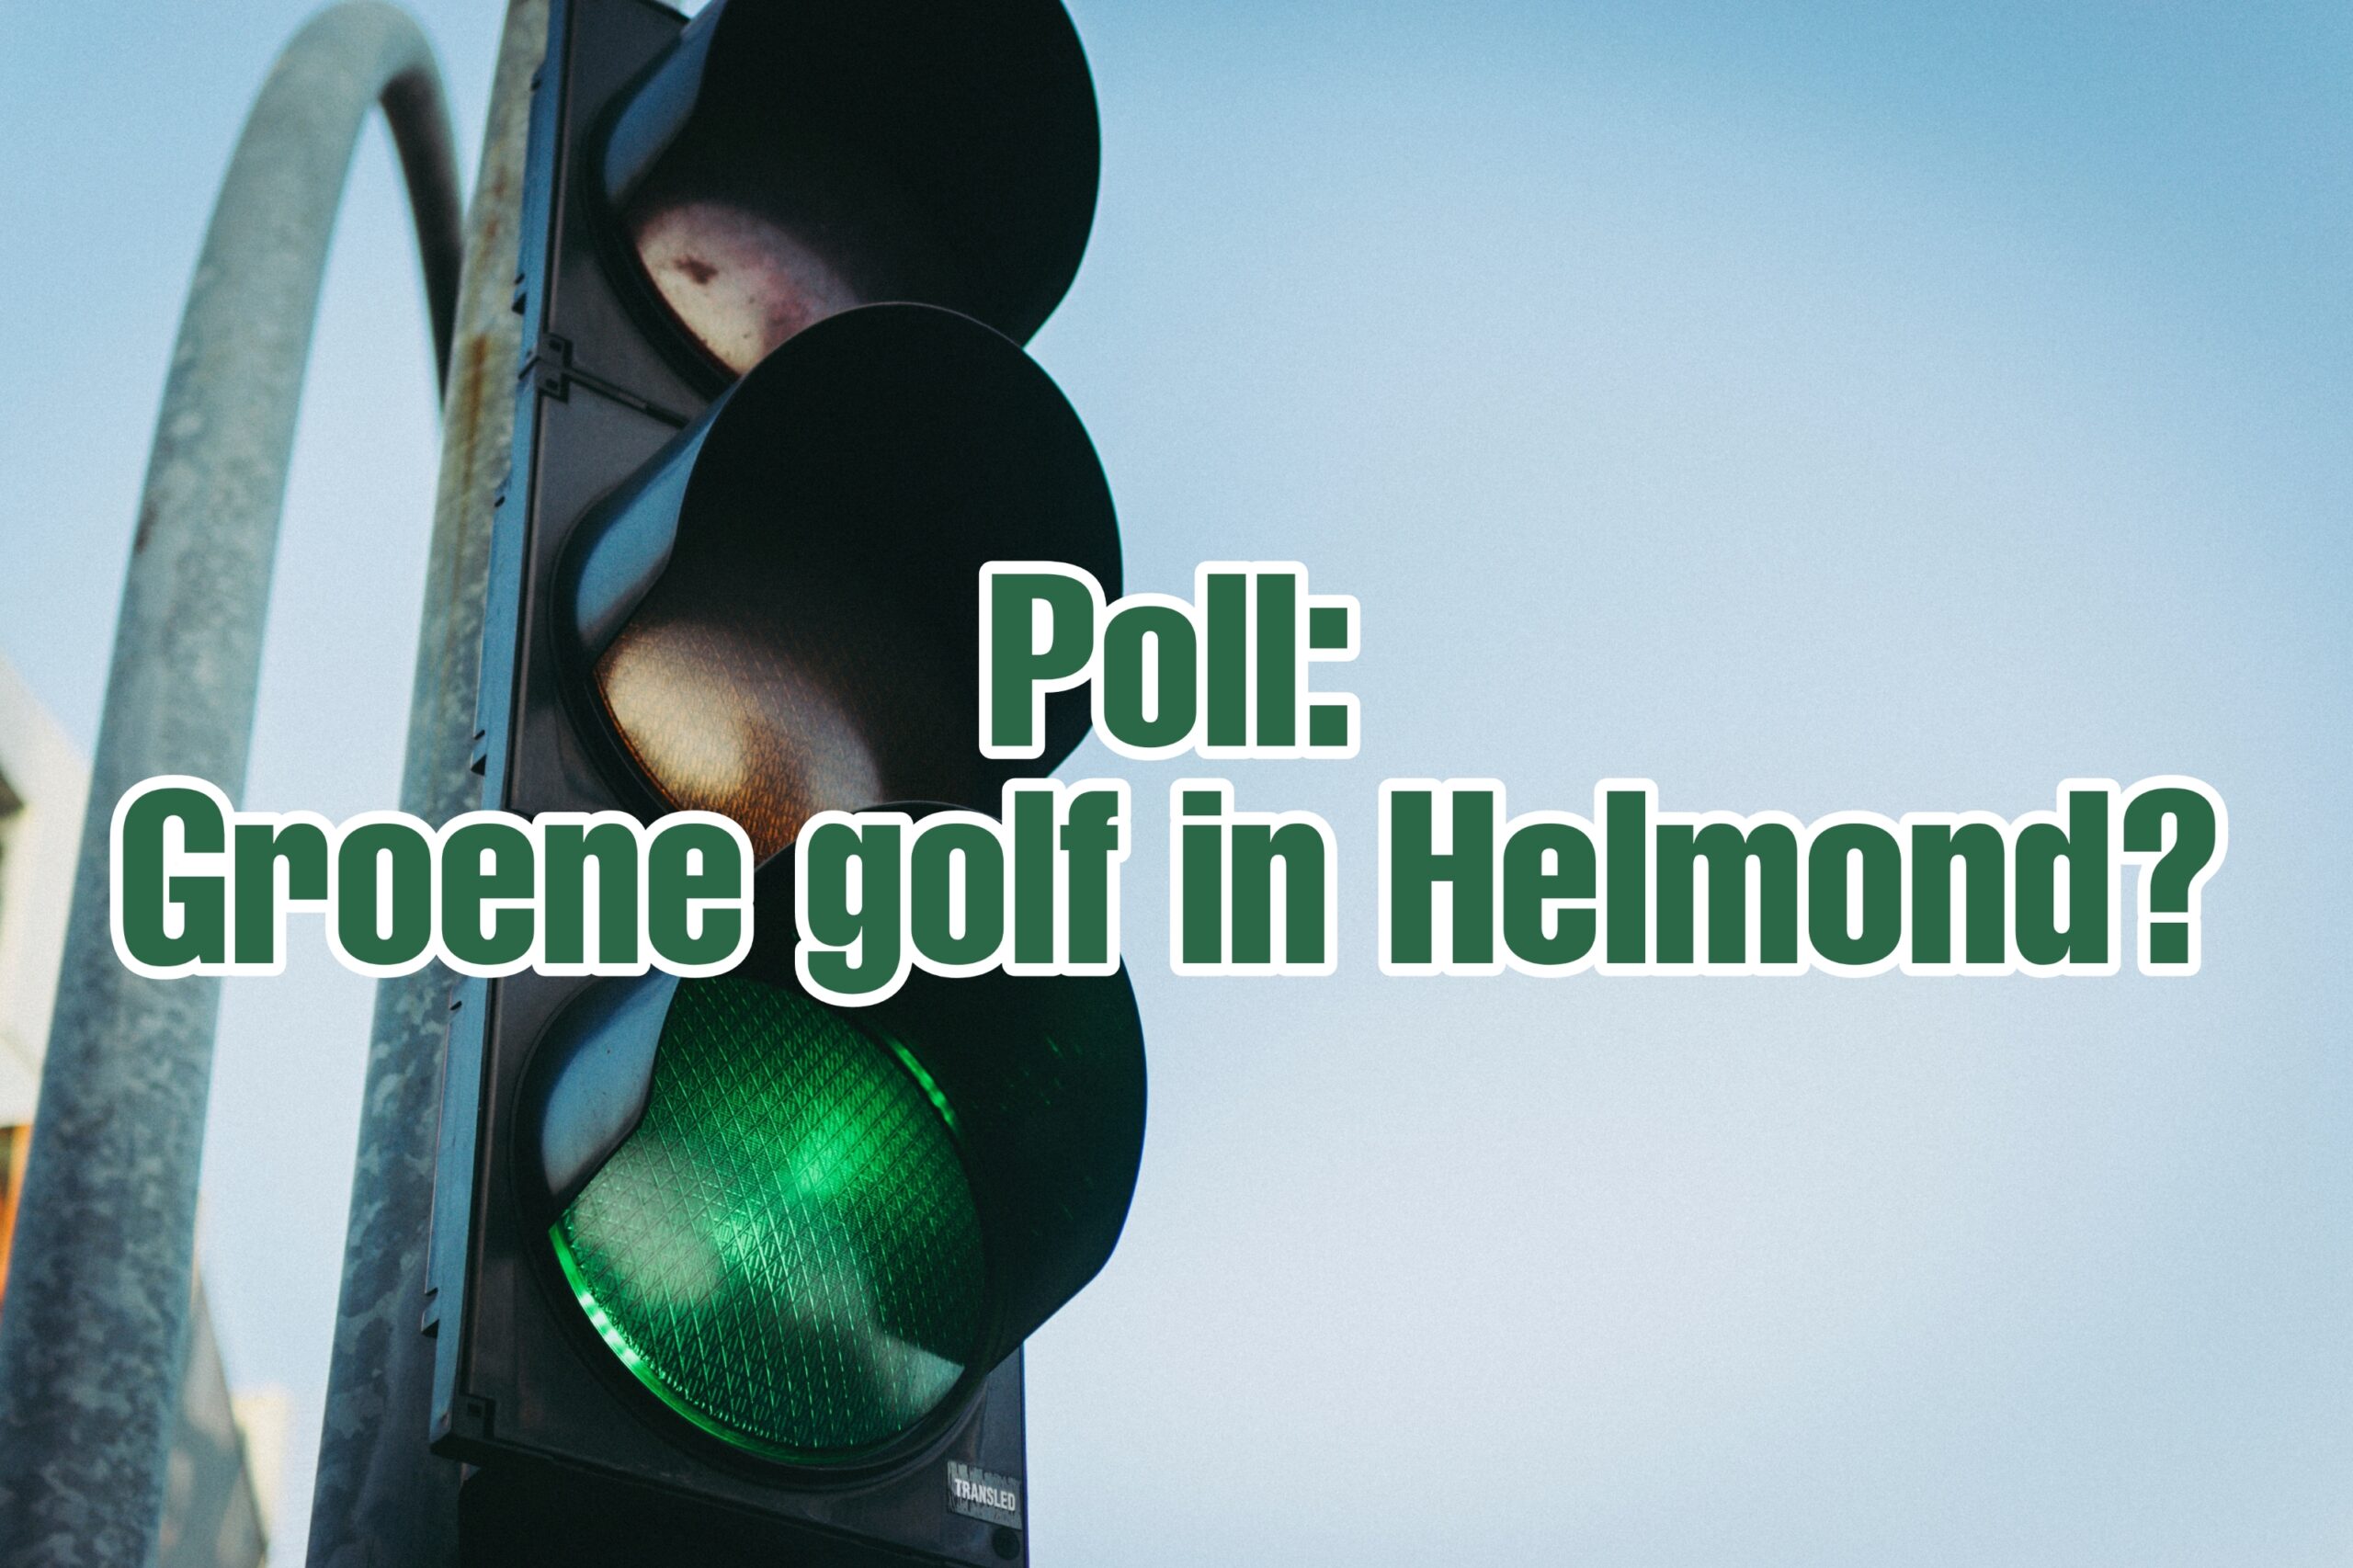 Groene golf in Helmond